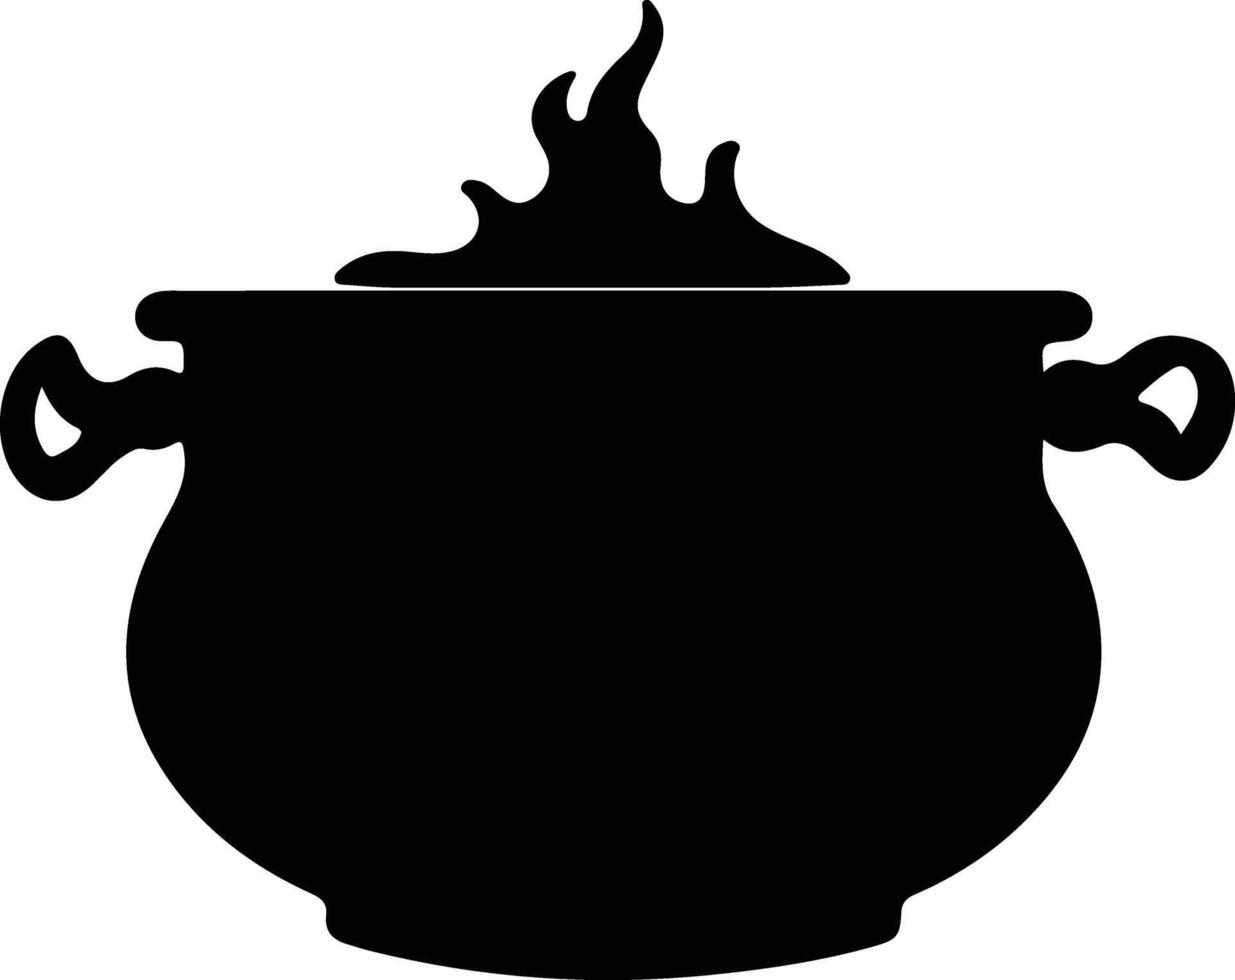 Black cauldron  black silhouette vector